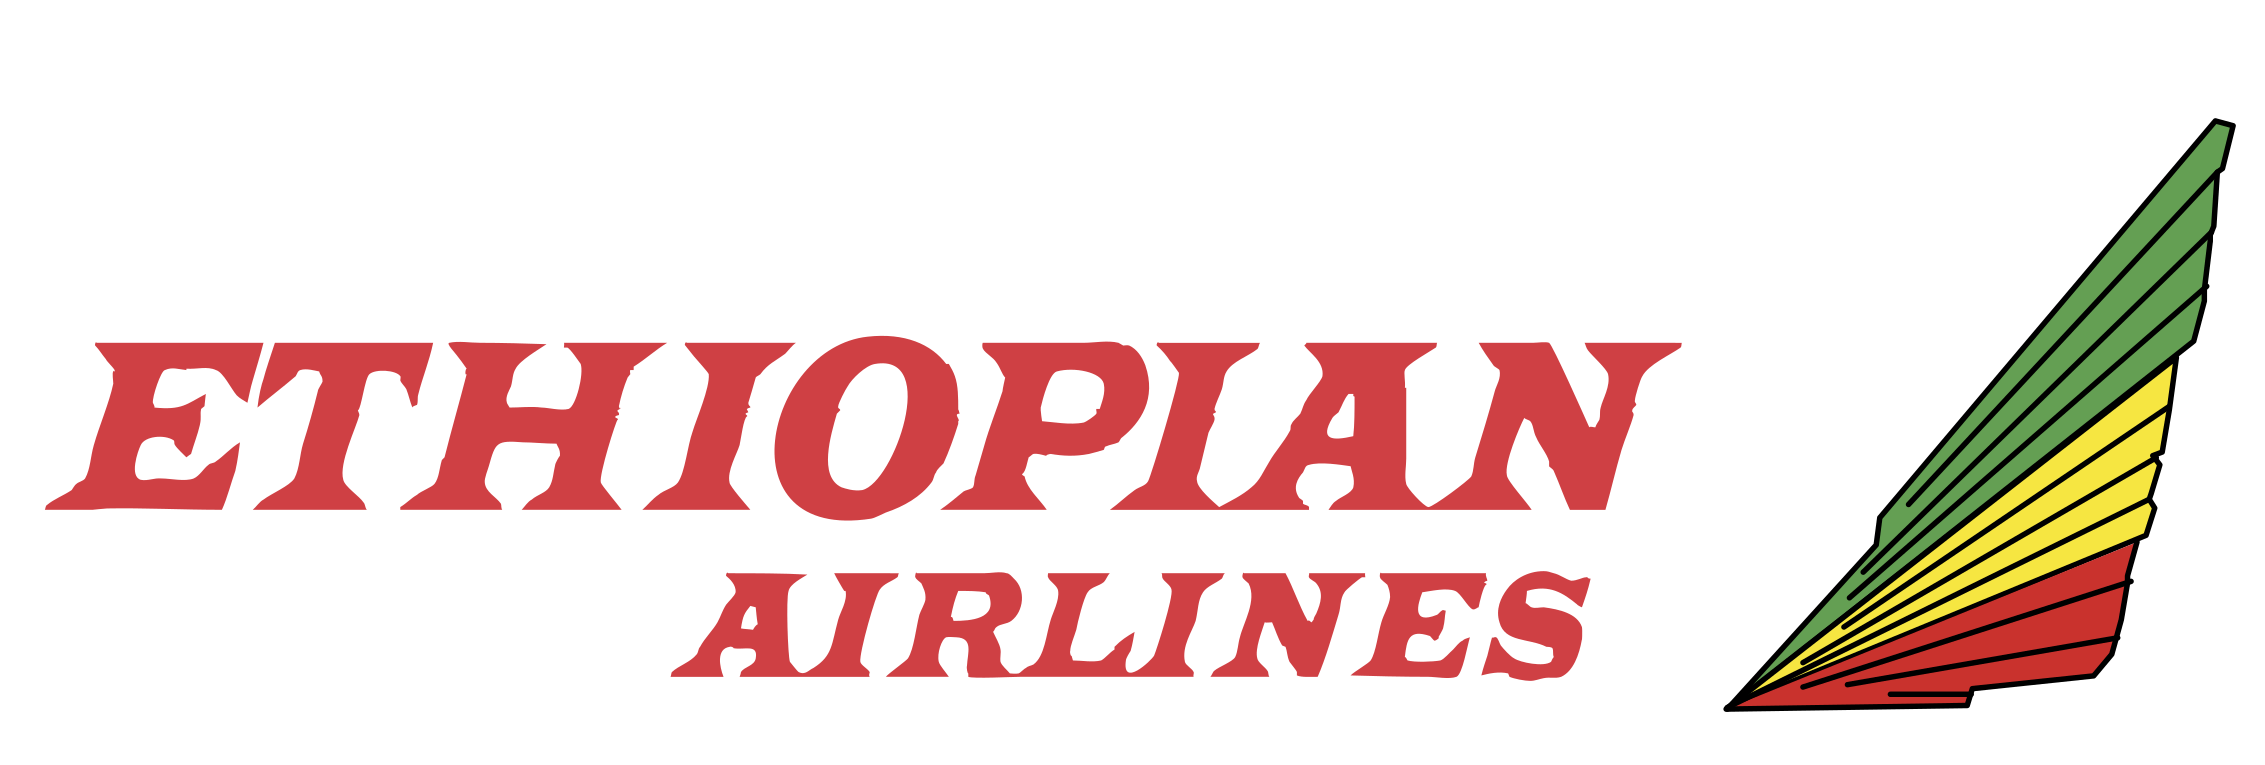 ethiopian-airlines-logo-png-transparent-min